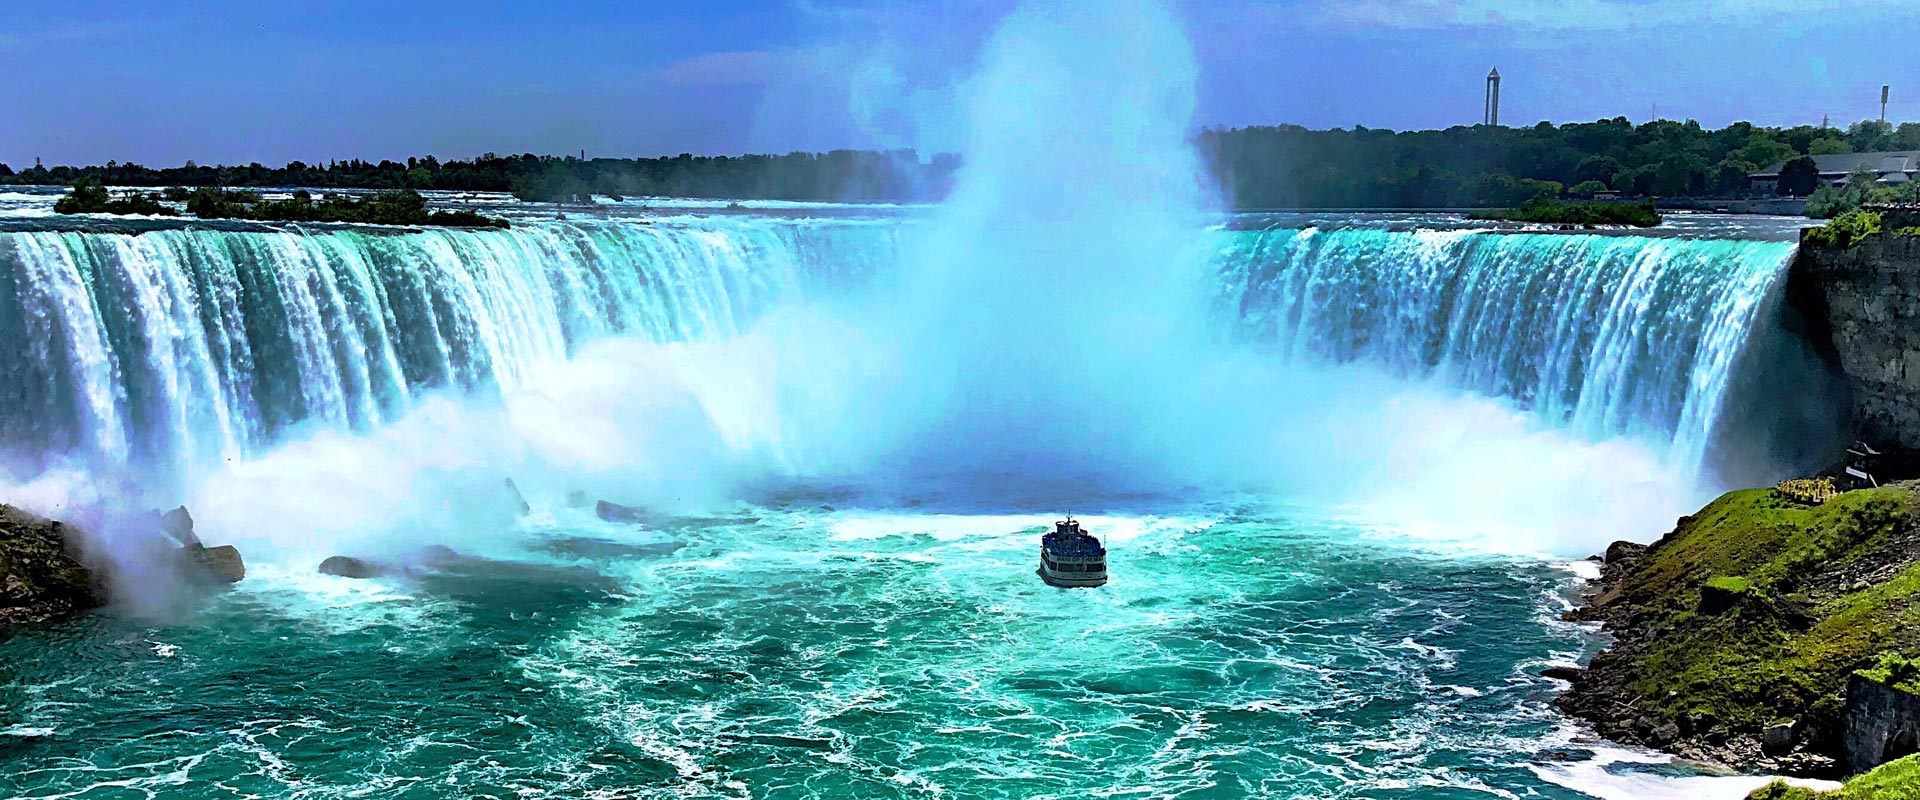 Tour Niagara Falls from Toronto